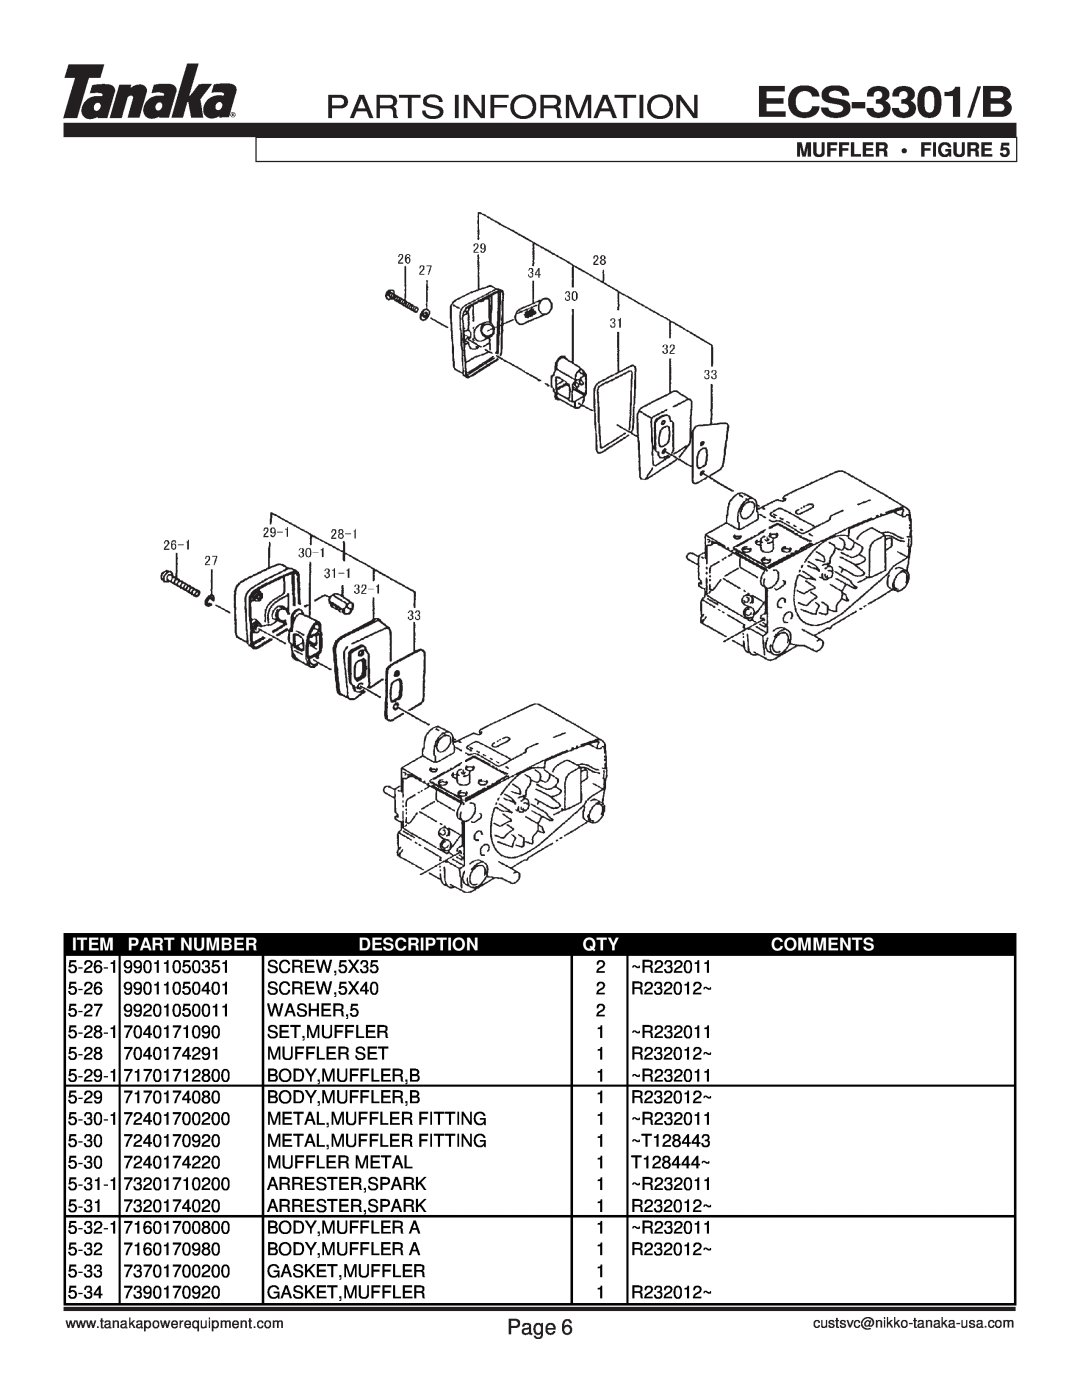 Tanaka manual Muffler Figure, PARTS INFORMATION ECS-3301/B, Page, Part Number, Description, Comments 